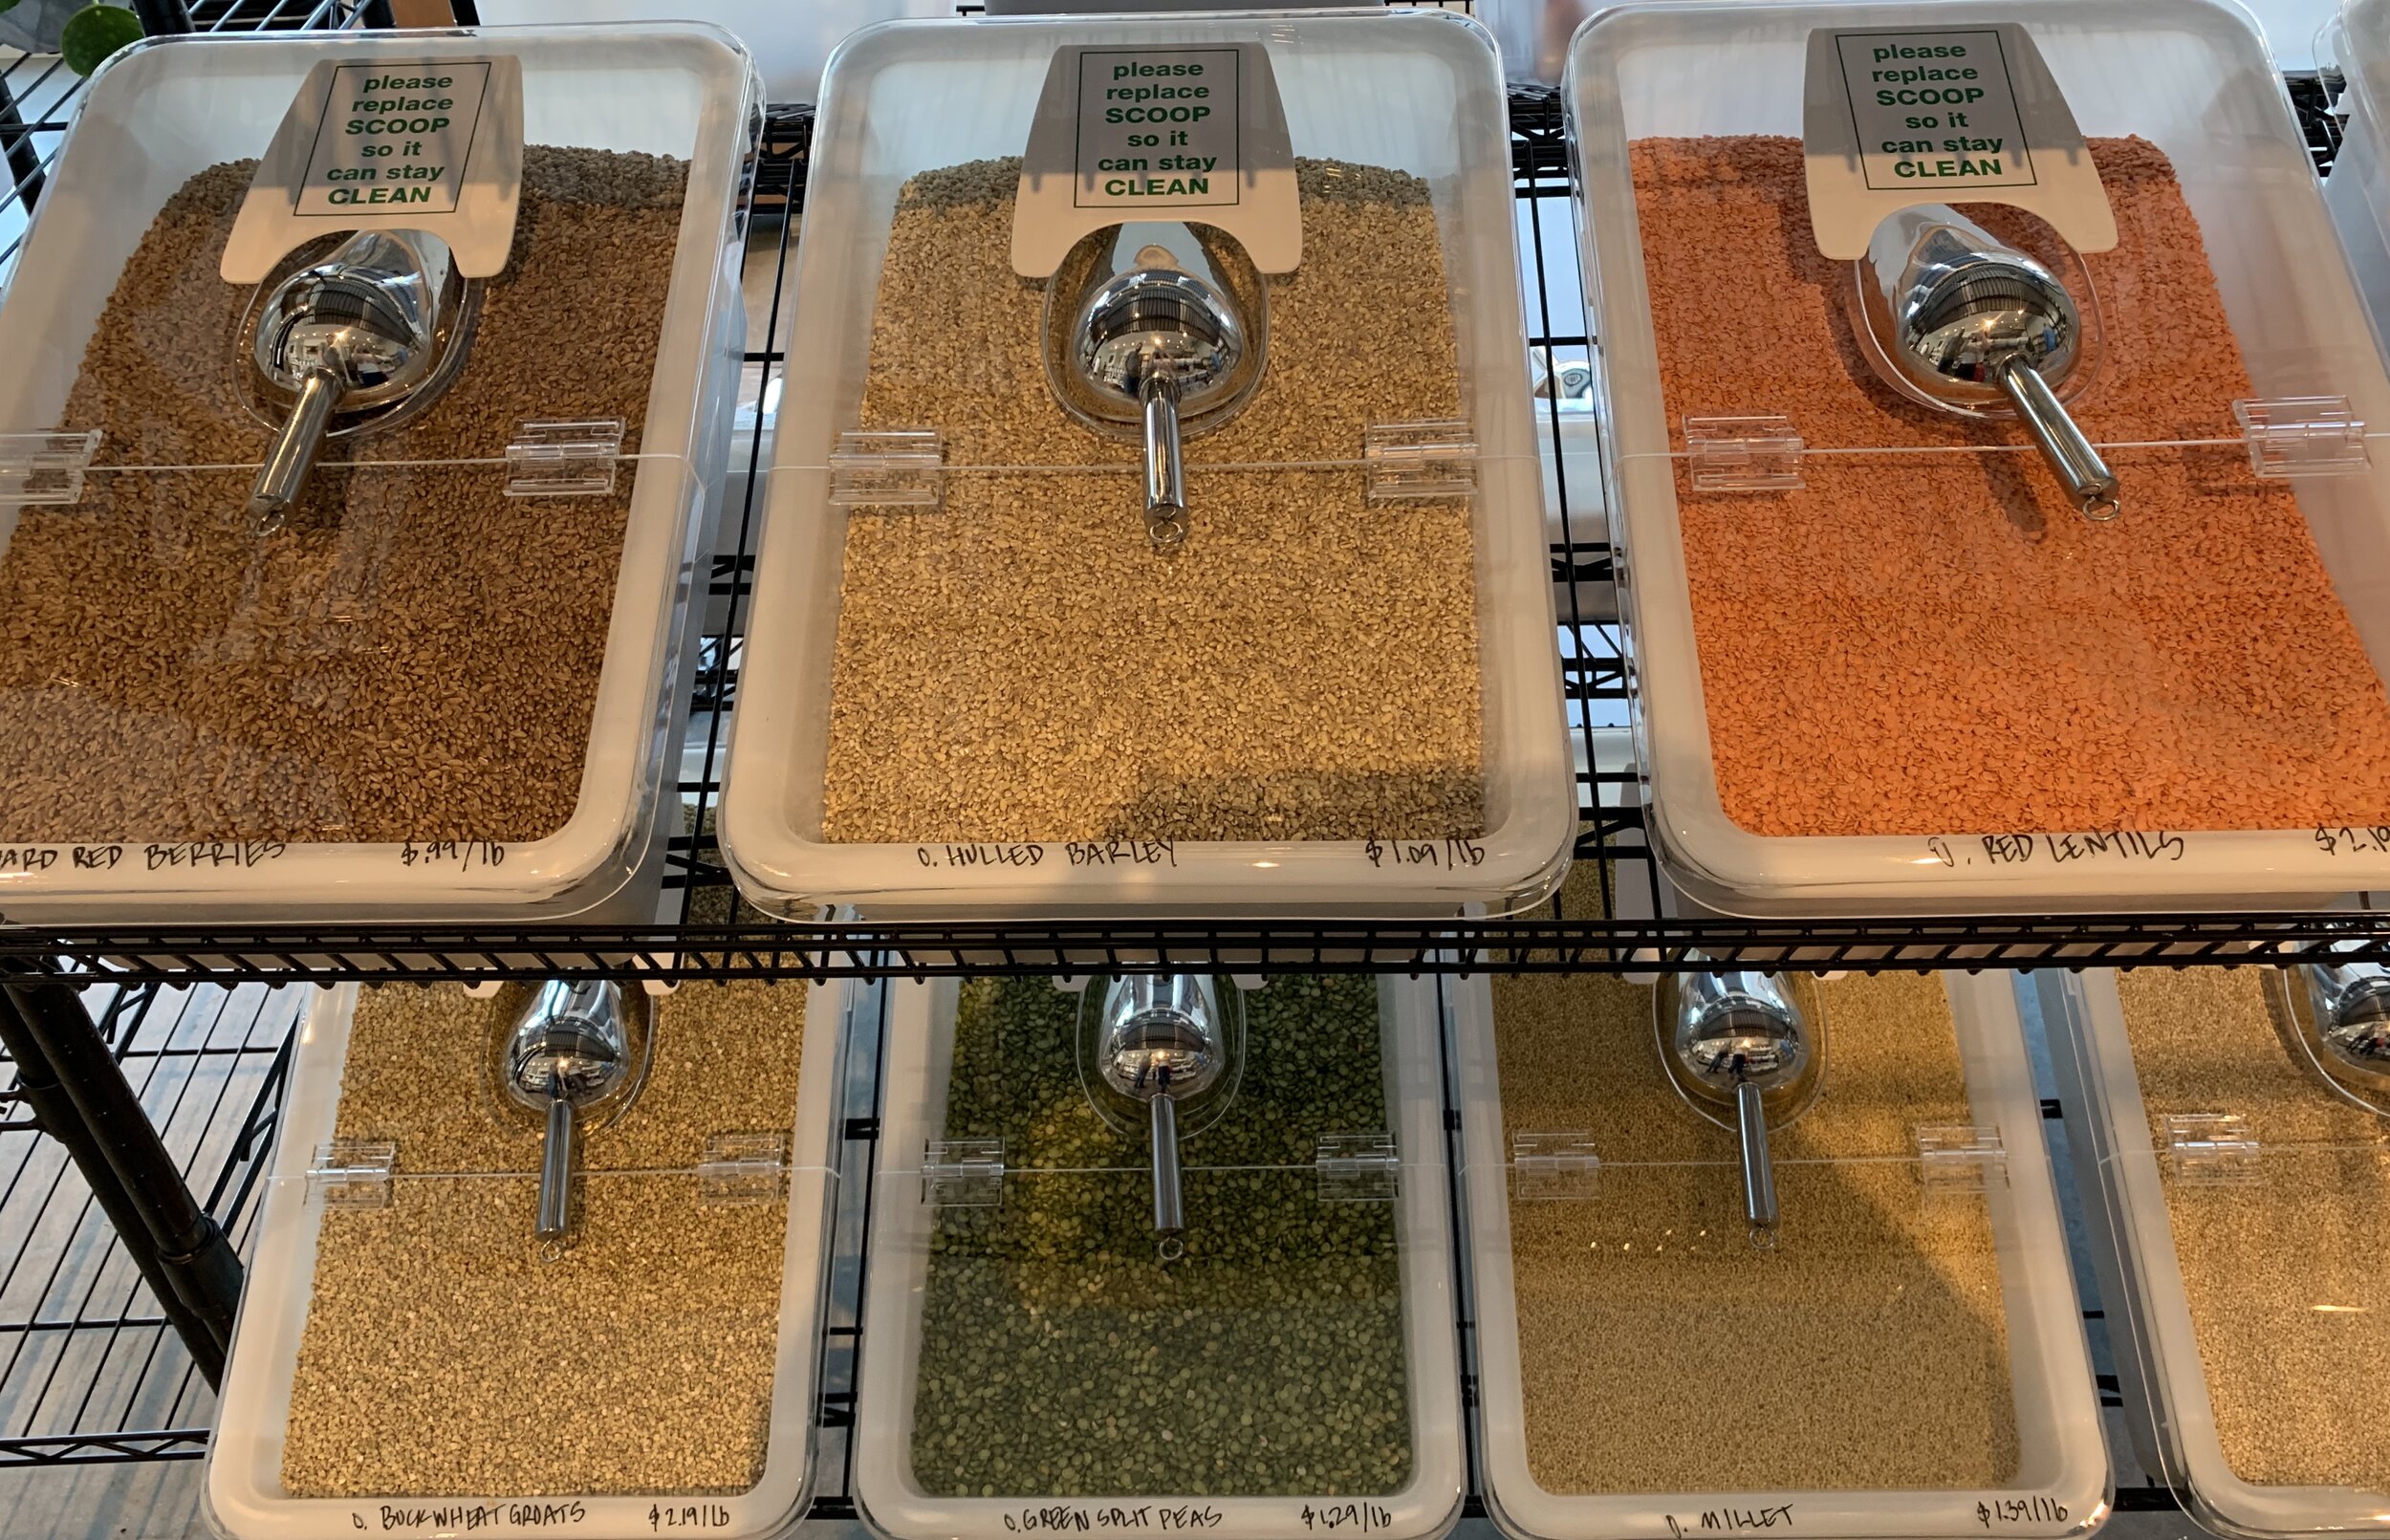 bulk bins including hulled barley, red lentils, buckwheat groats, green split peas, and millet